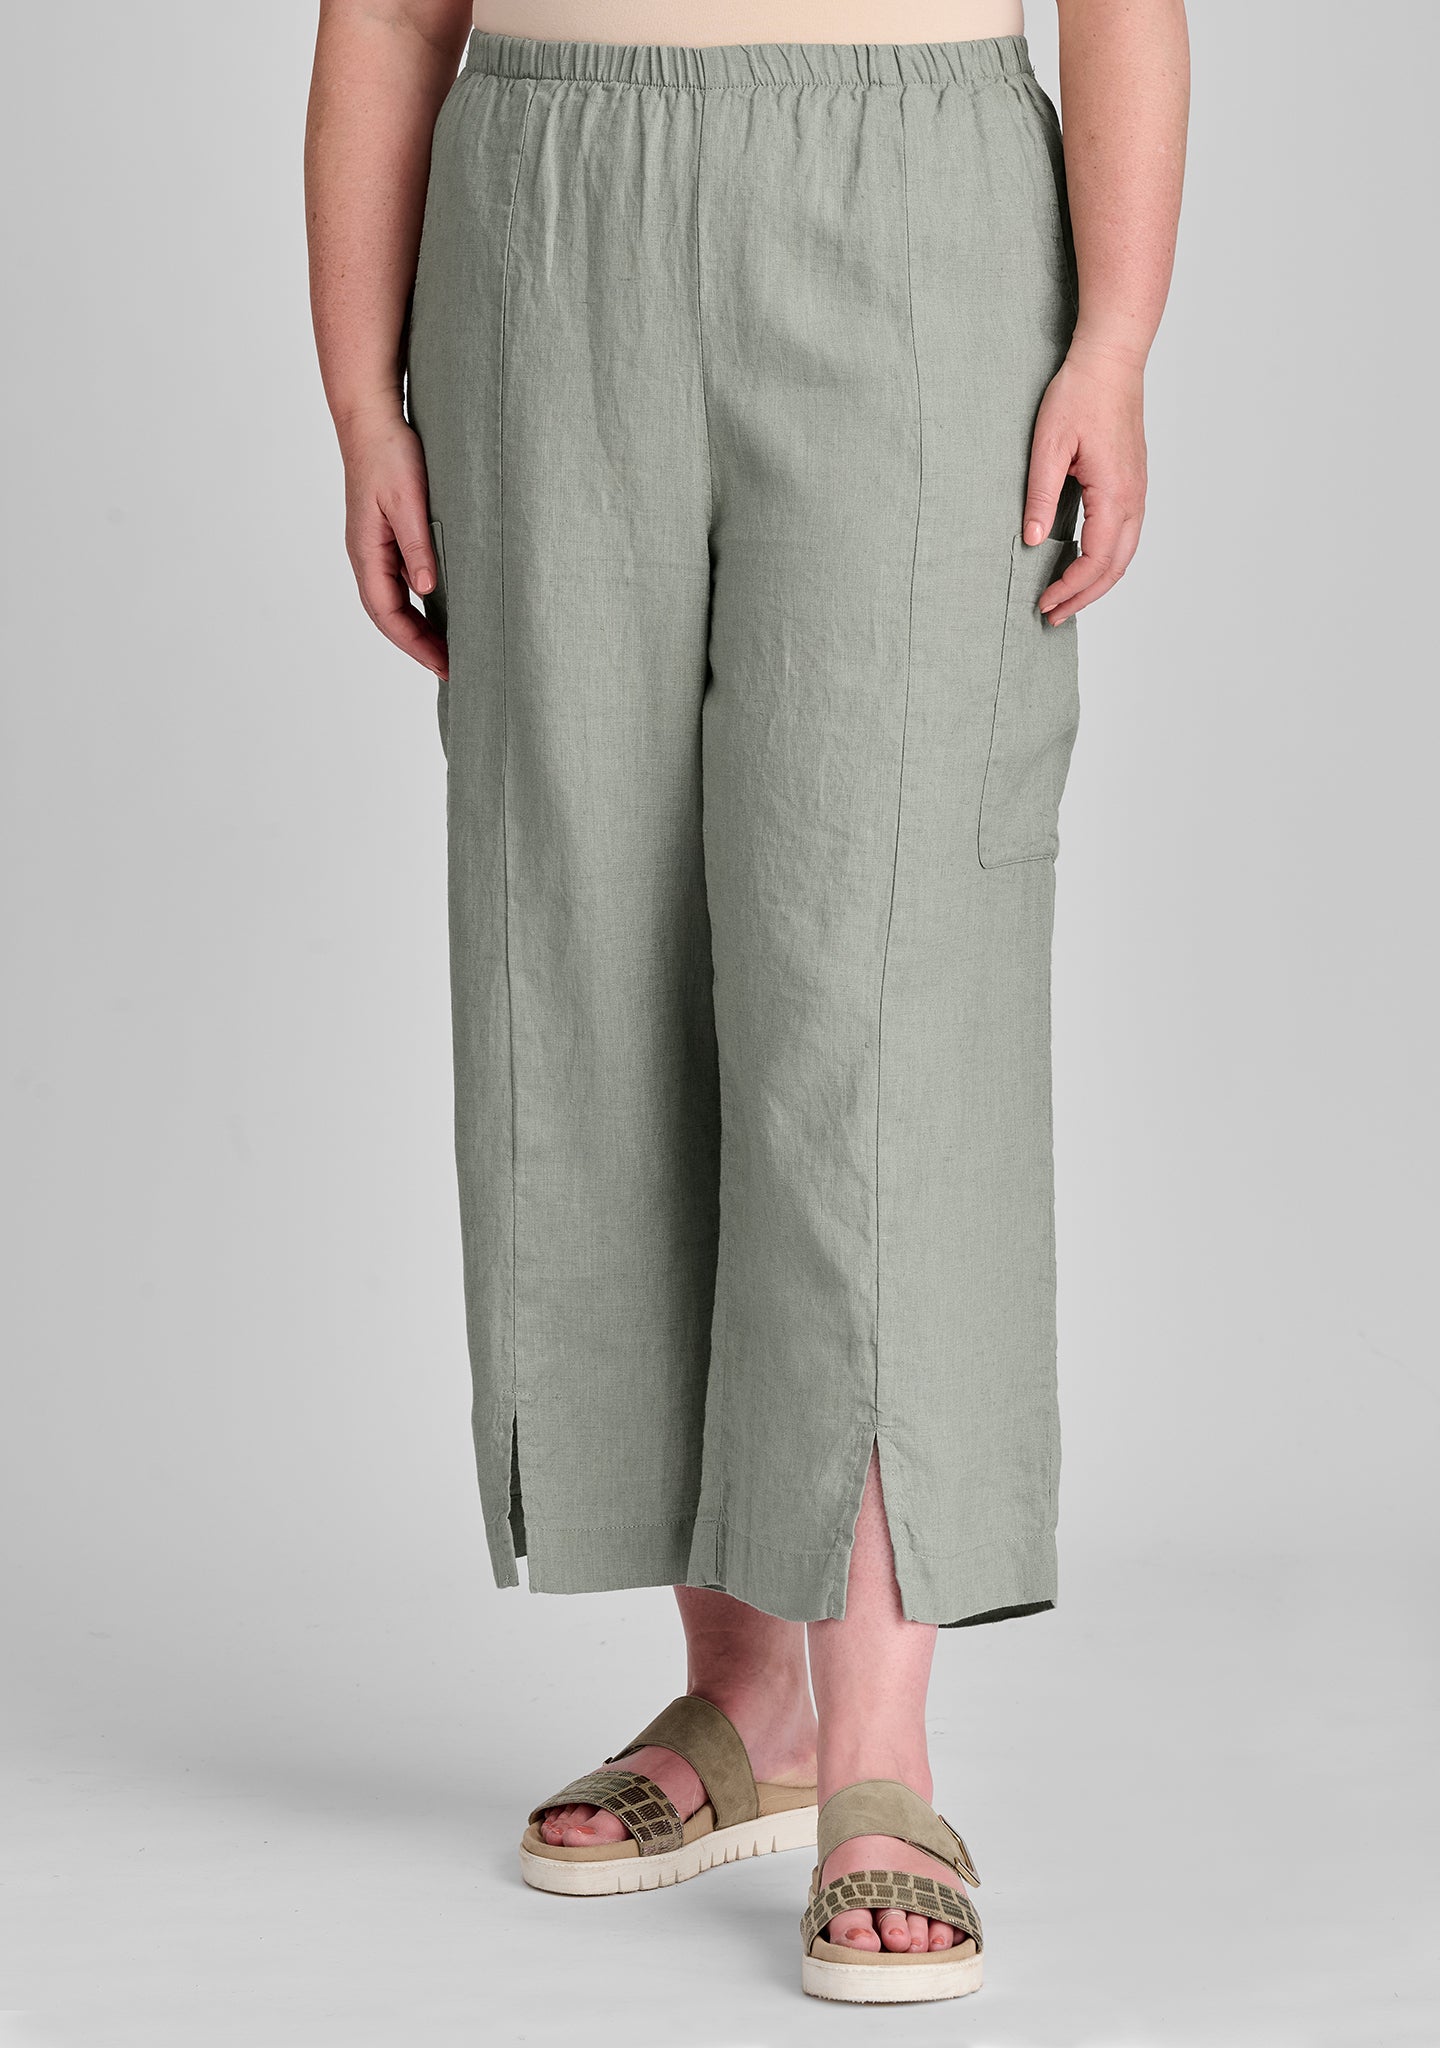 www. - Elastic waist women Linen pants wide leg pants